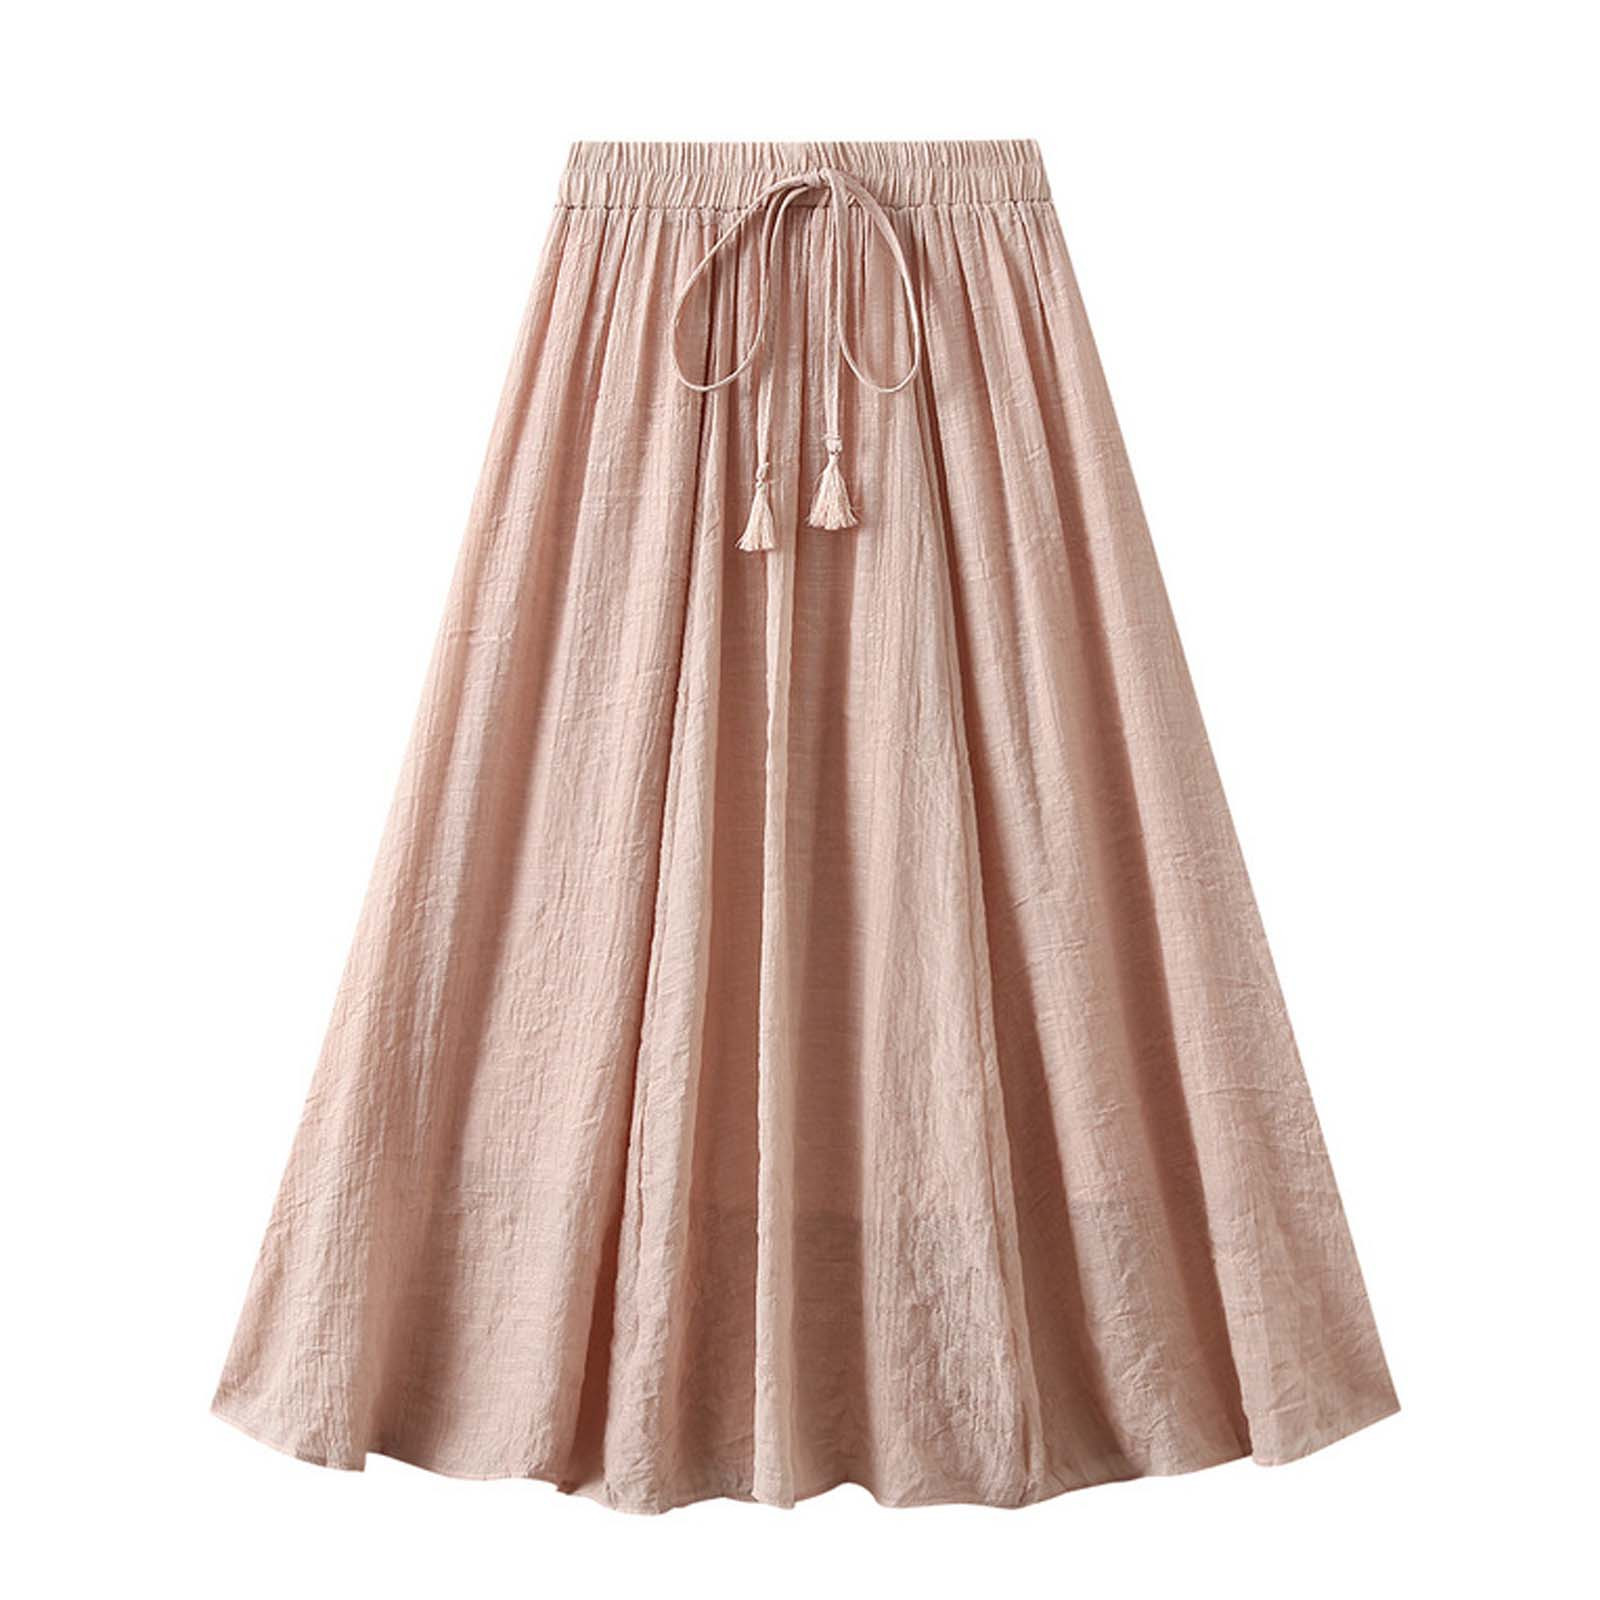 qolati Women's Cotton Linen Beach Midi Skirts Trendy High Waist ...